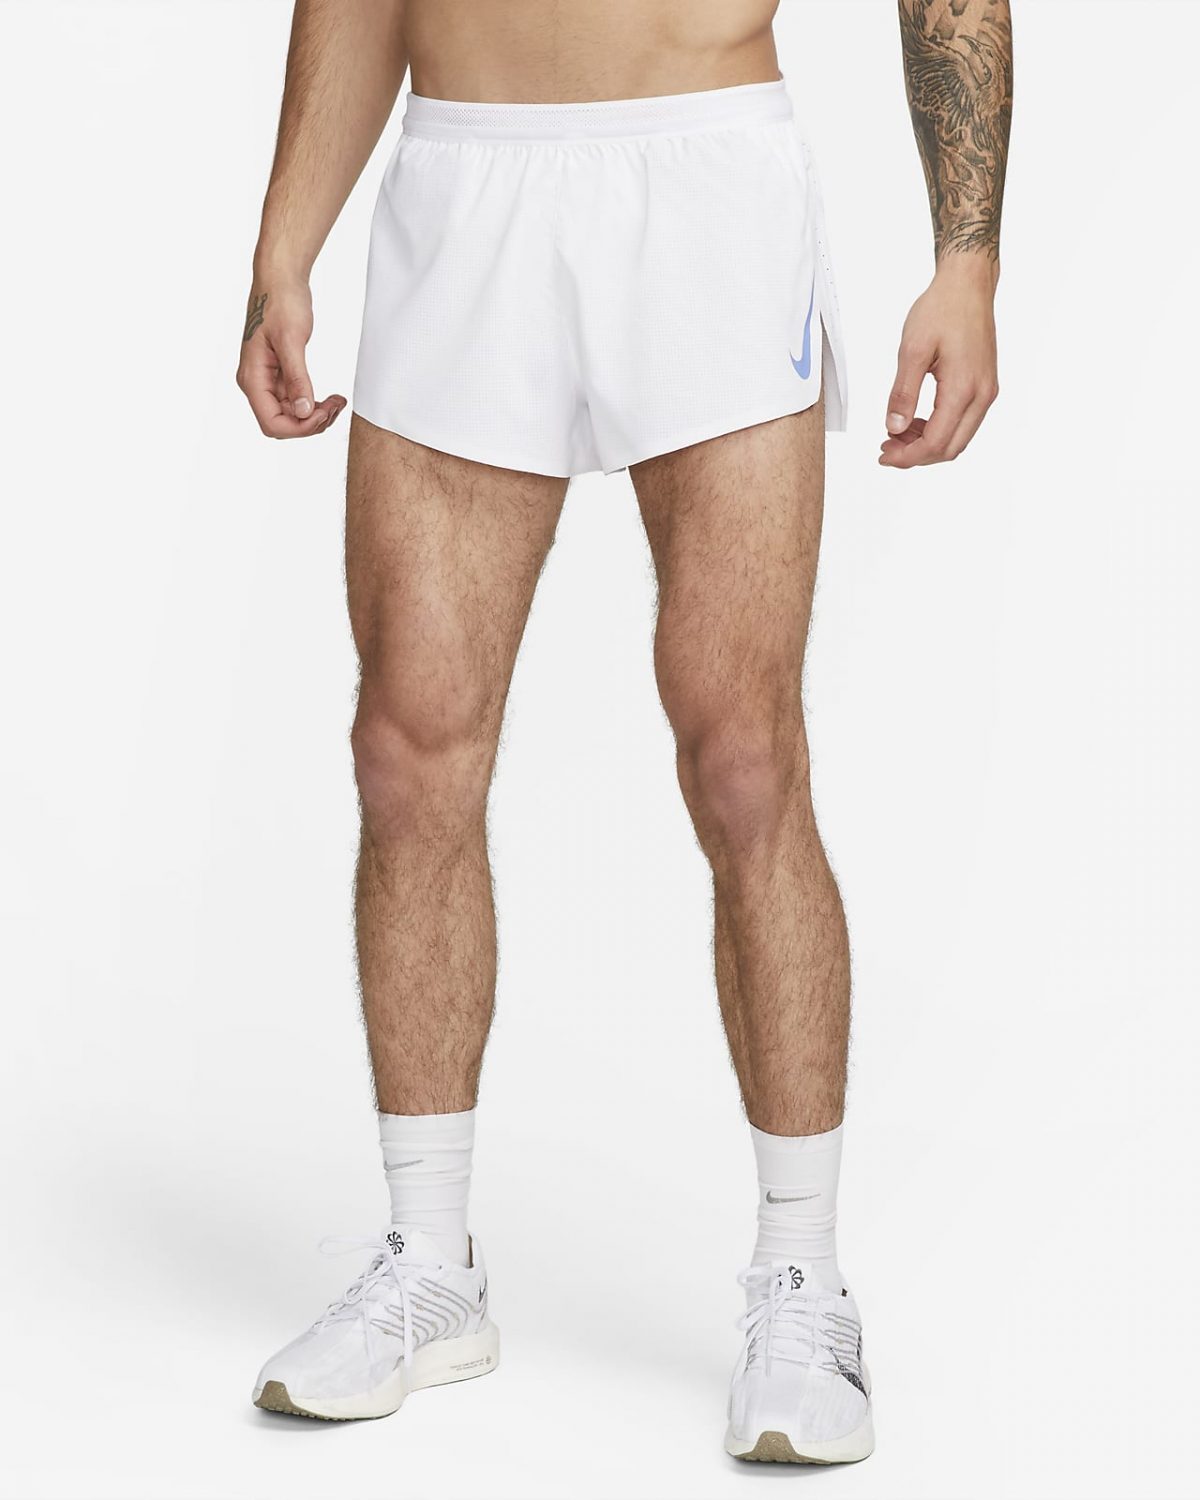 Мужские шорты Nike Dri-FIT ADV фото